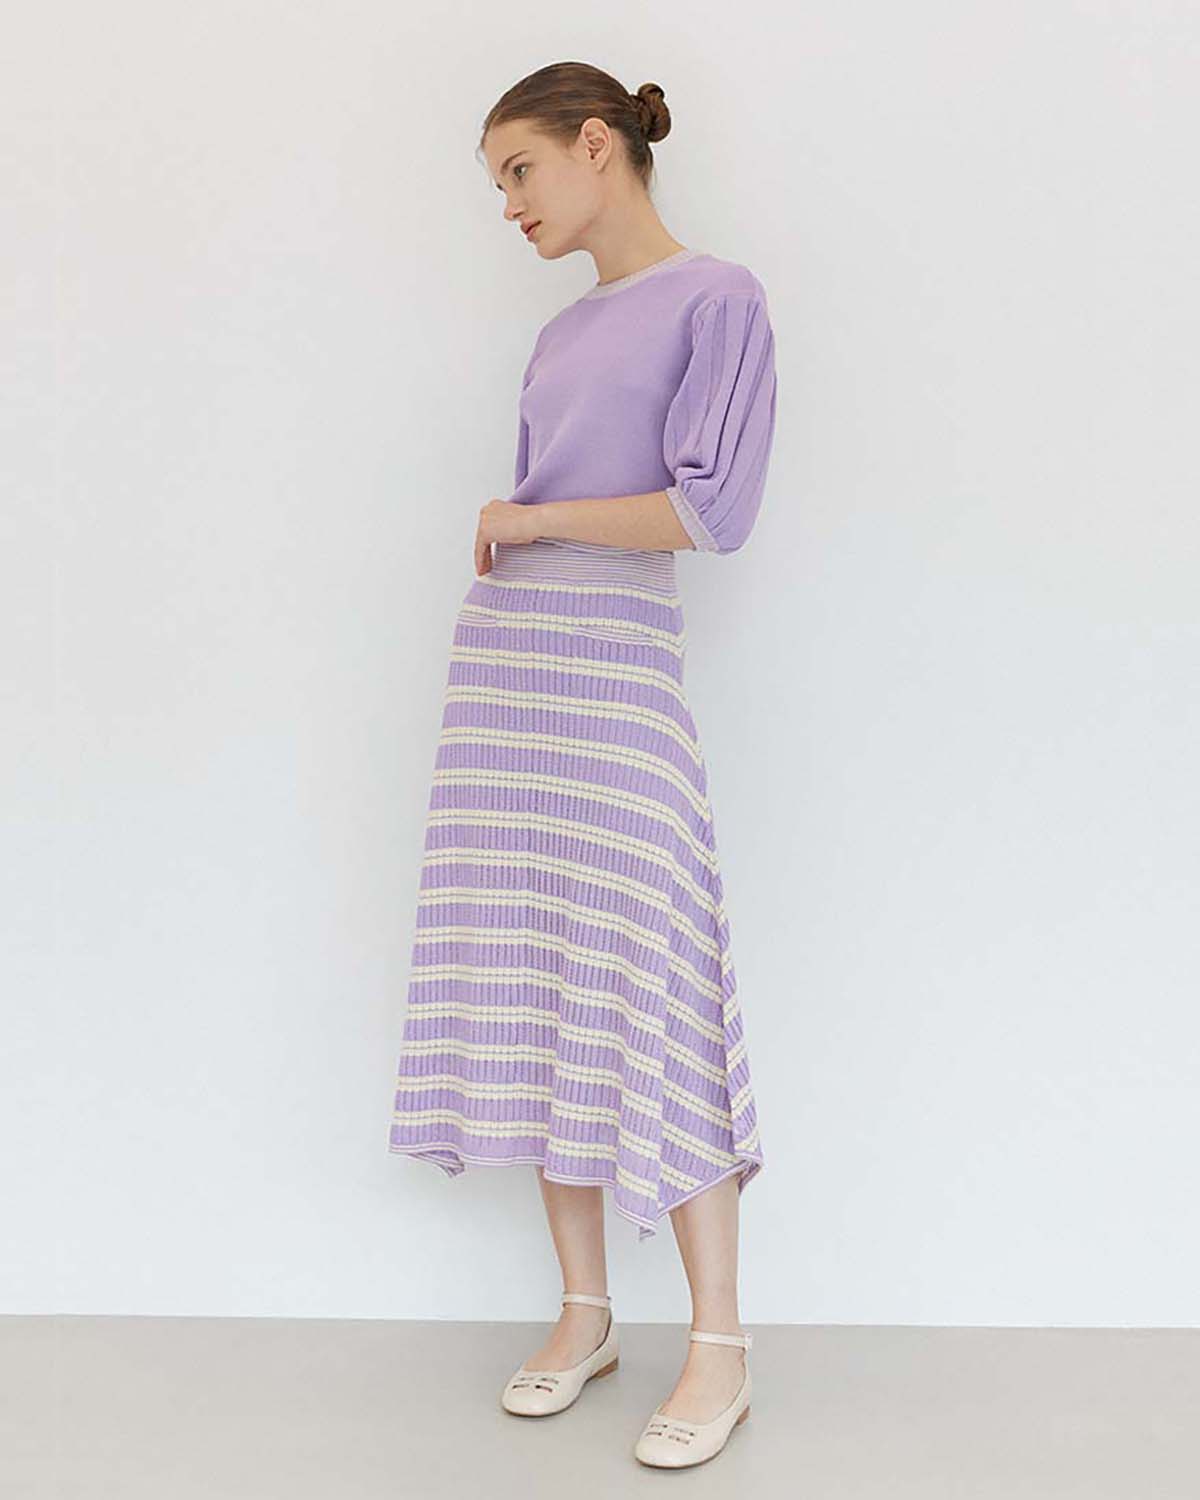 Emily Knit Top - Lavender